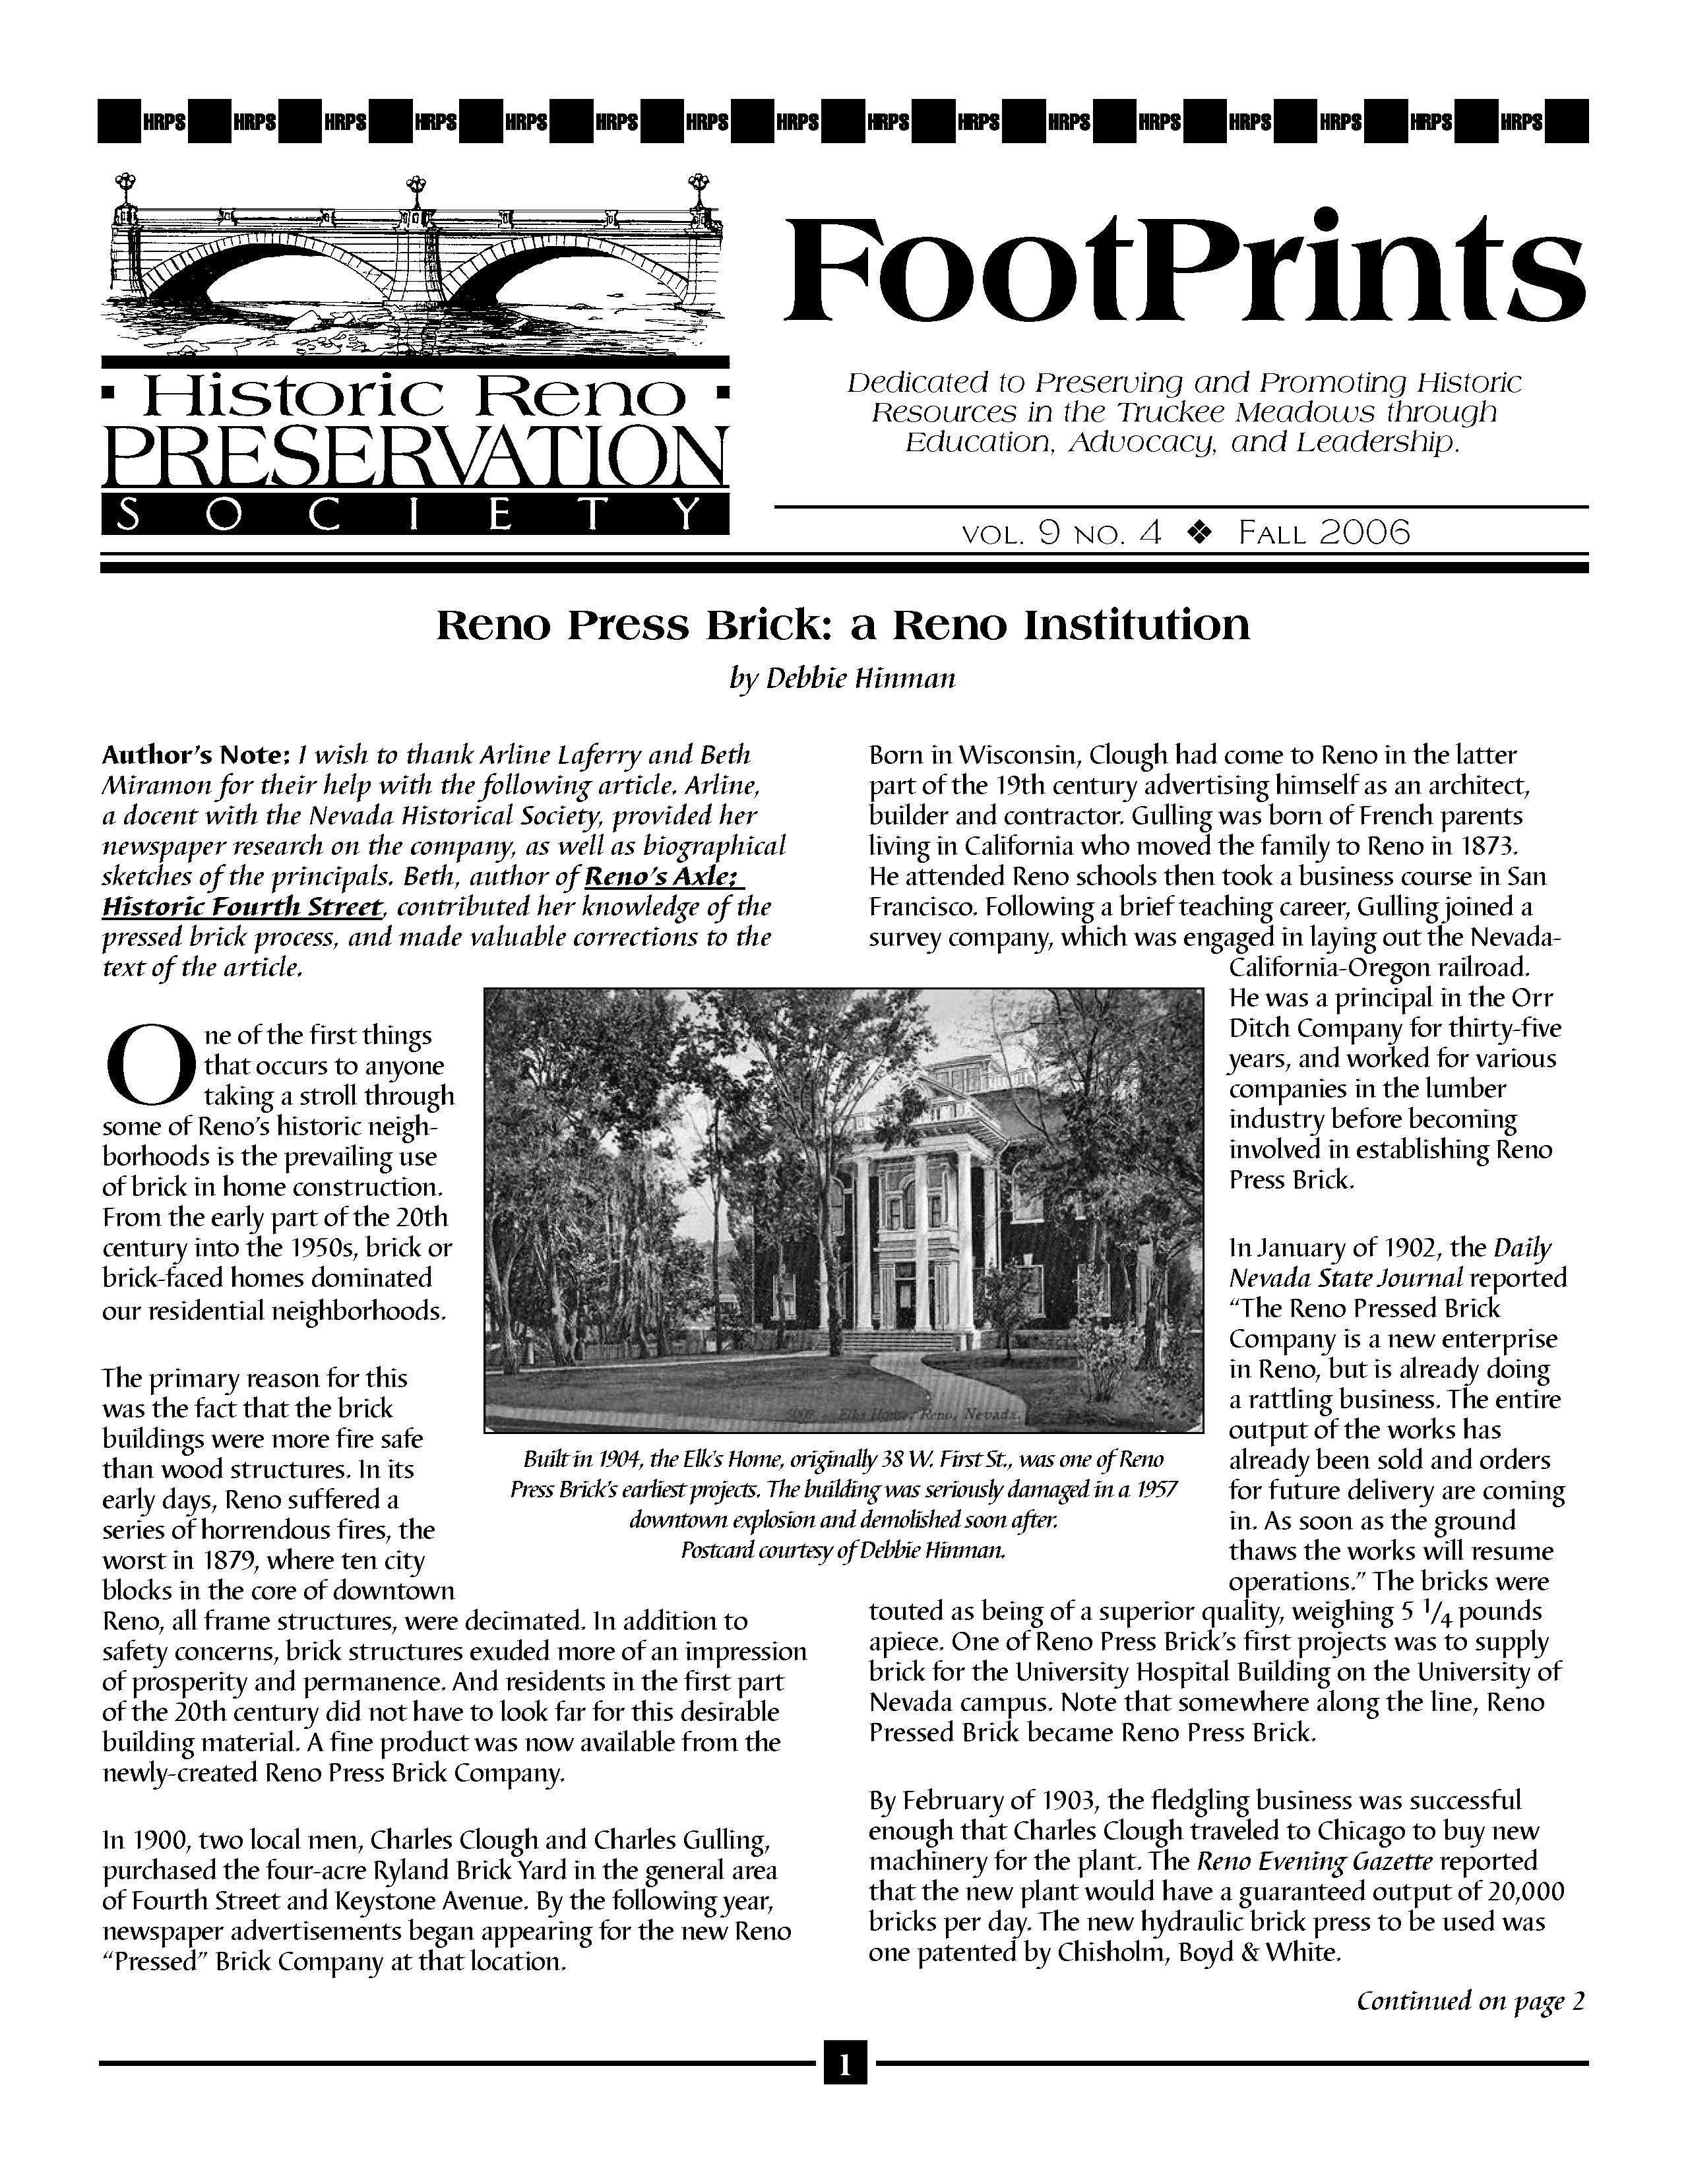 FootPrints Volume 9, Number 4, Fall 2006